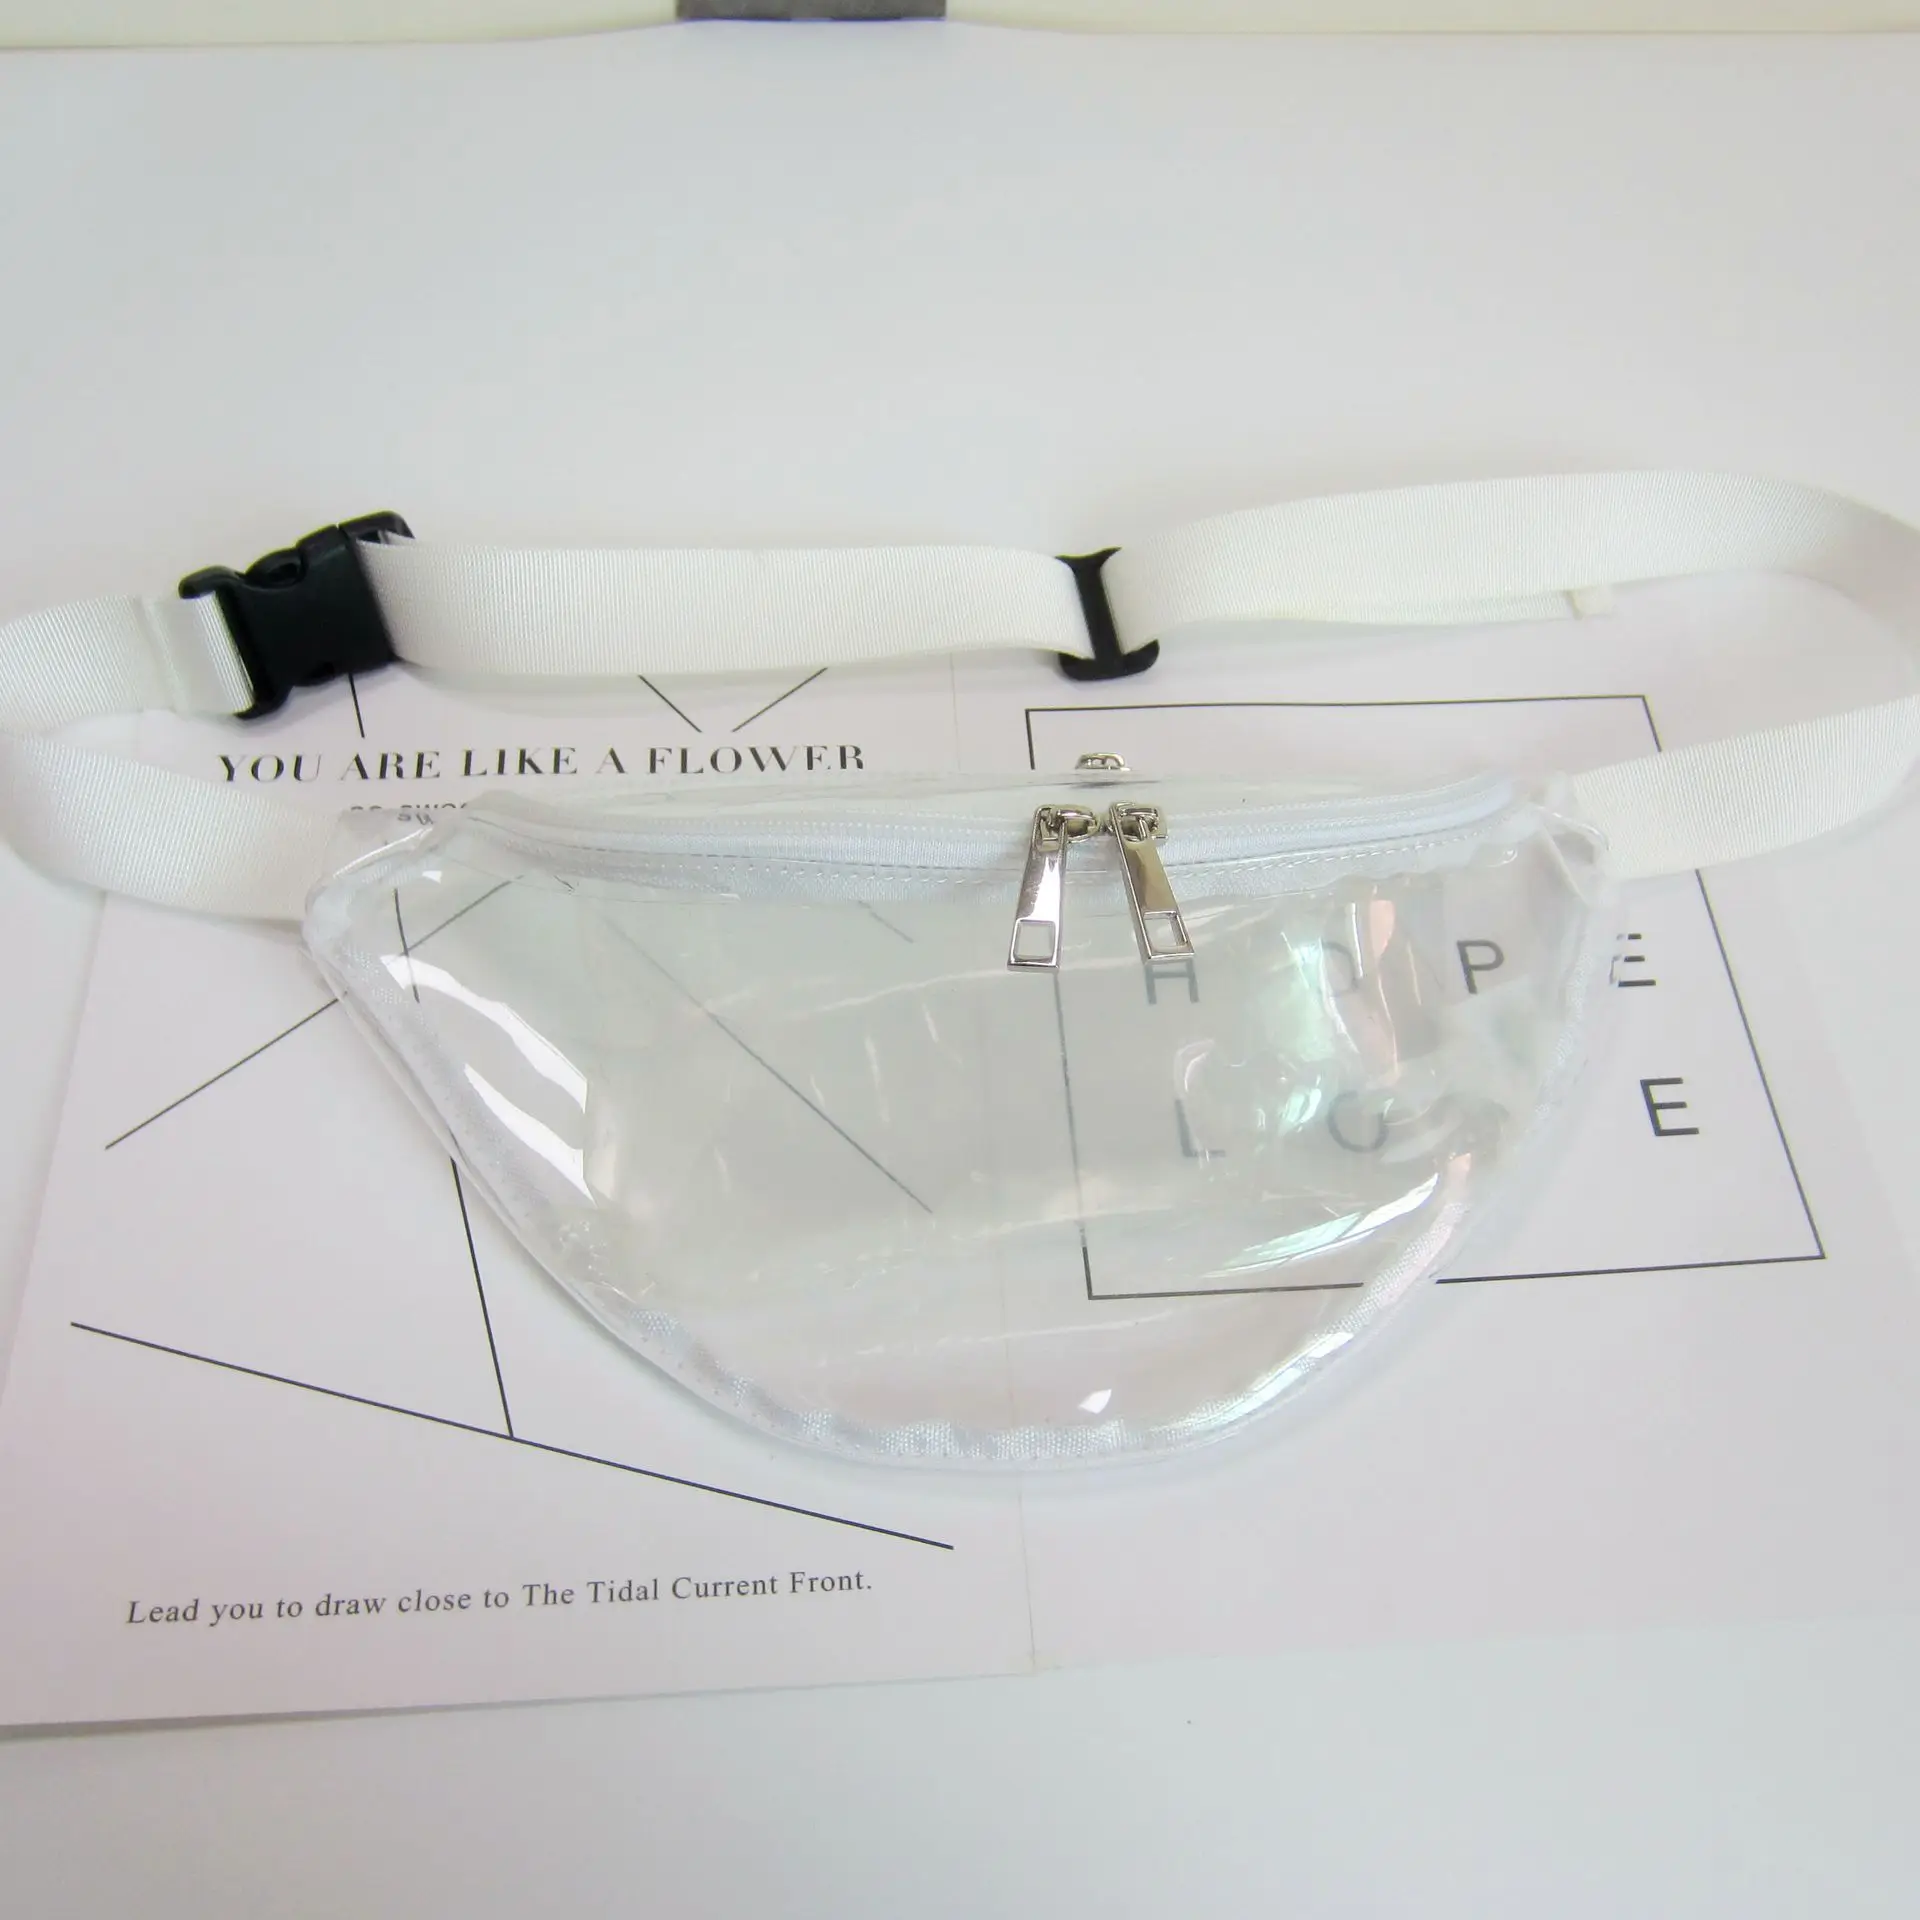 Поясная сумка с голограммой поясная сумка на талию Женская поясная сумка Многофункциональный желе лазерная прозрачная сумка женская